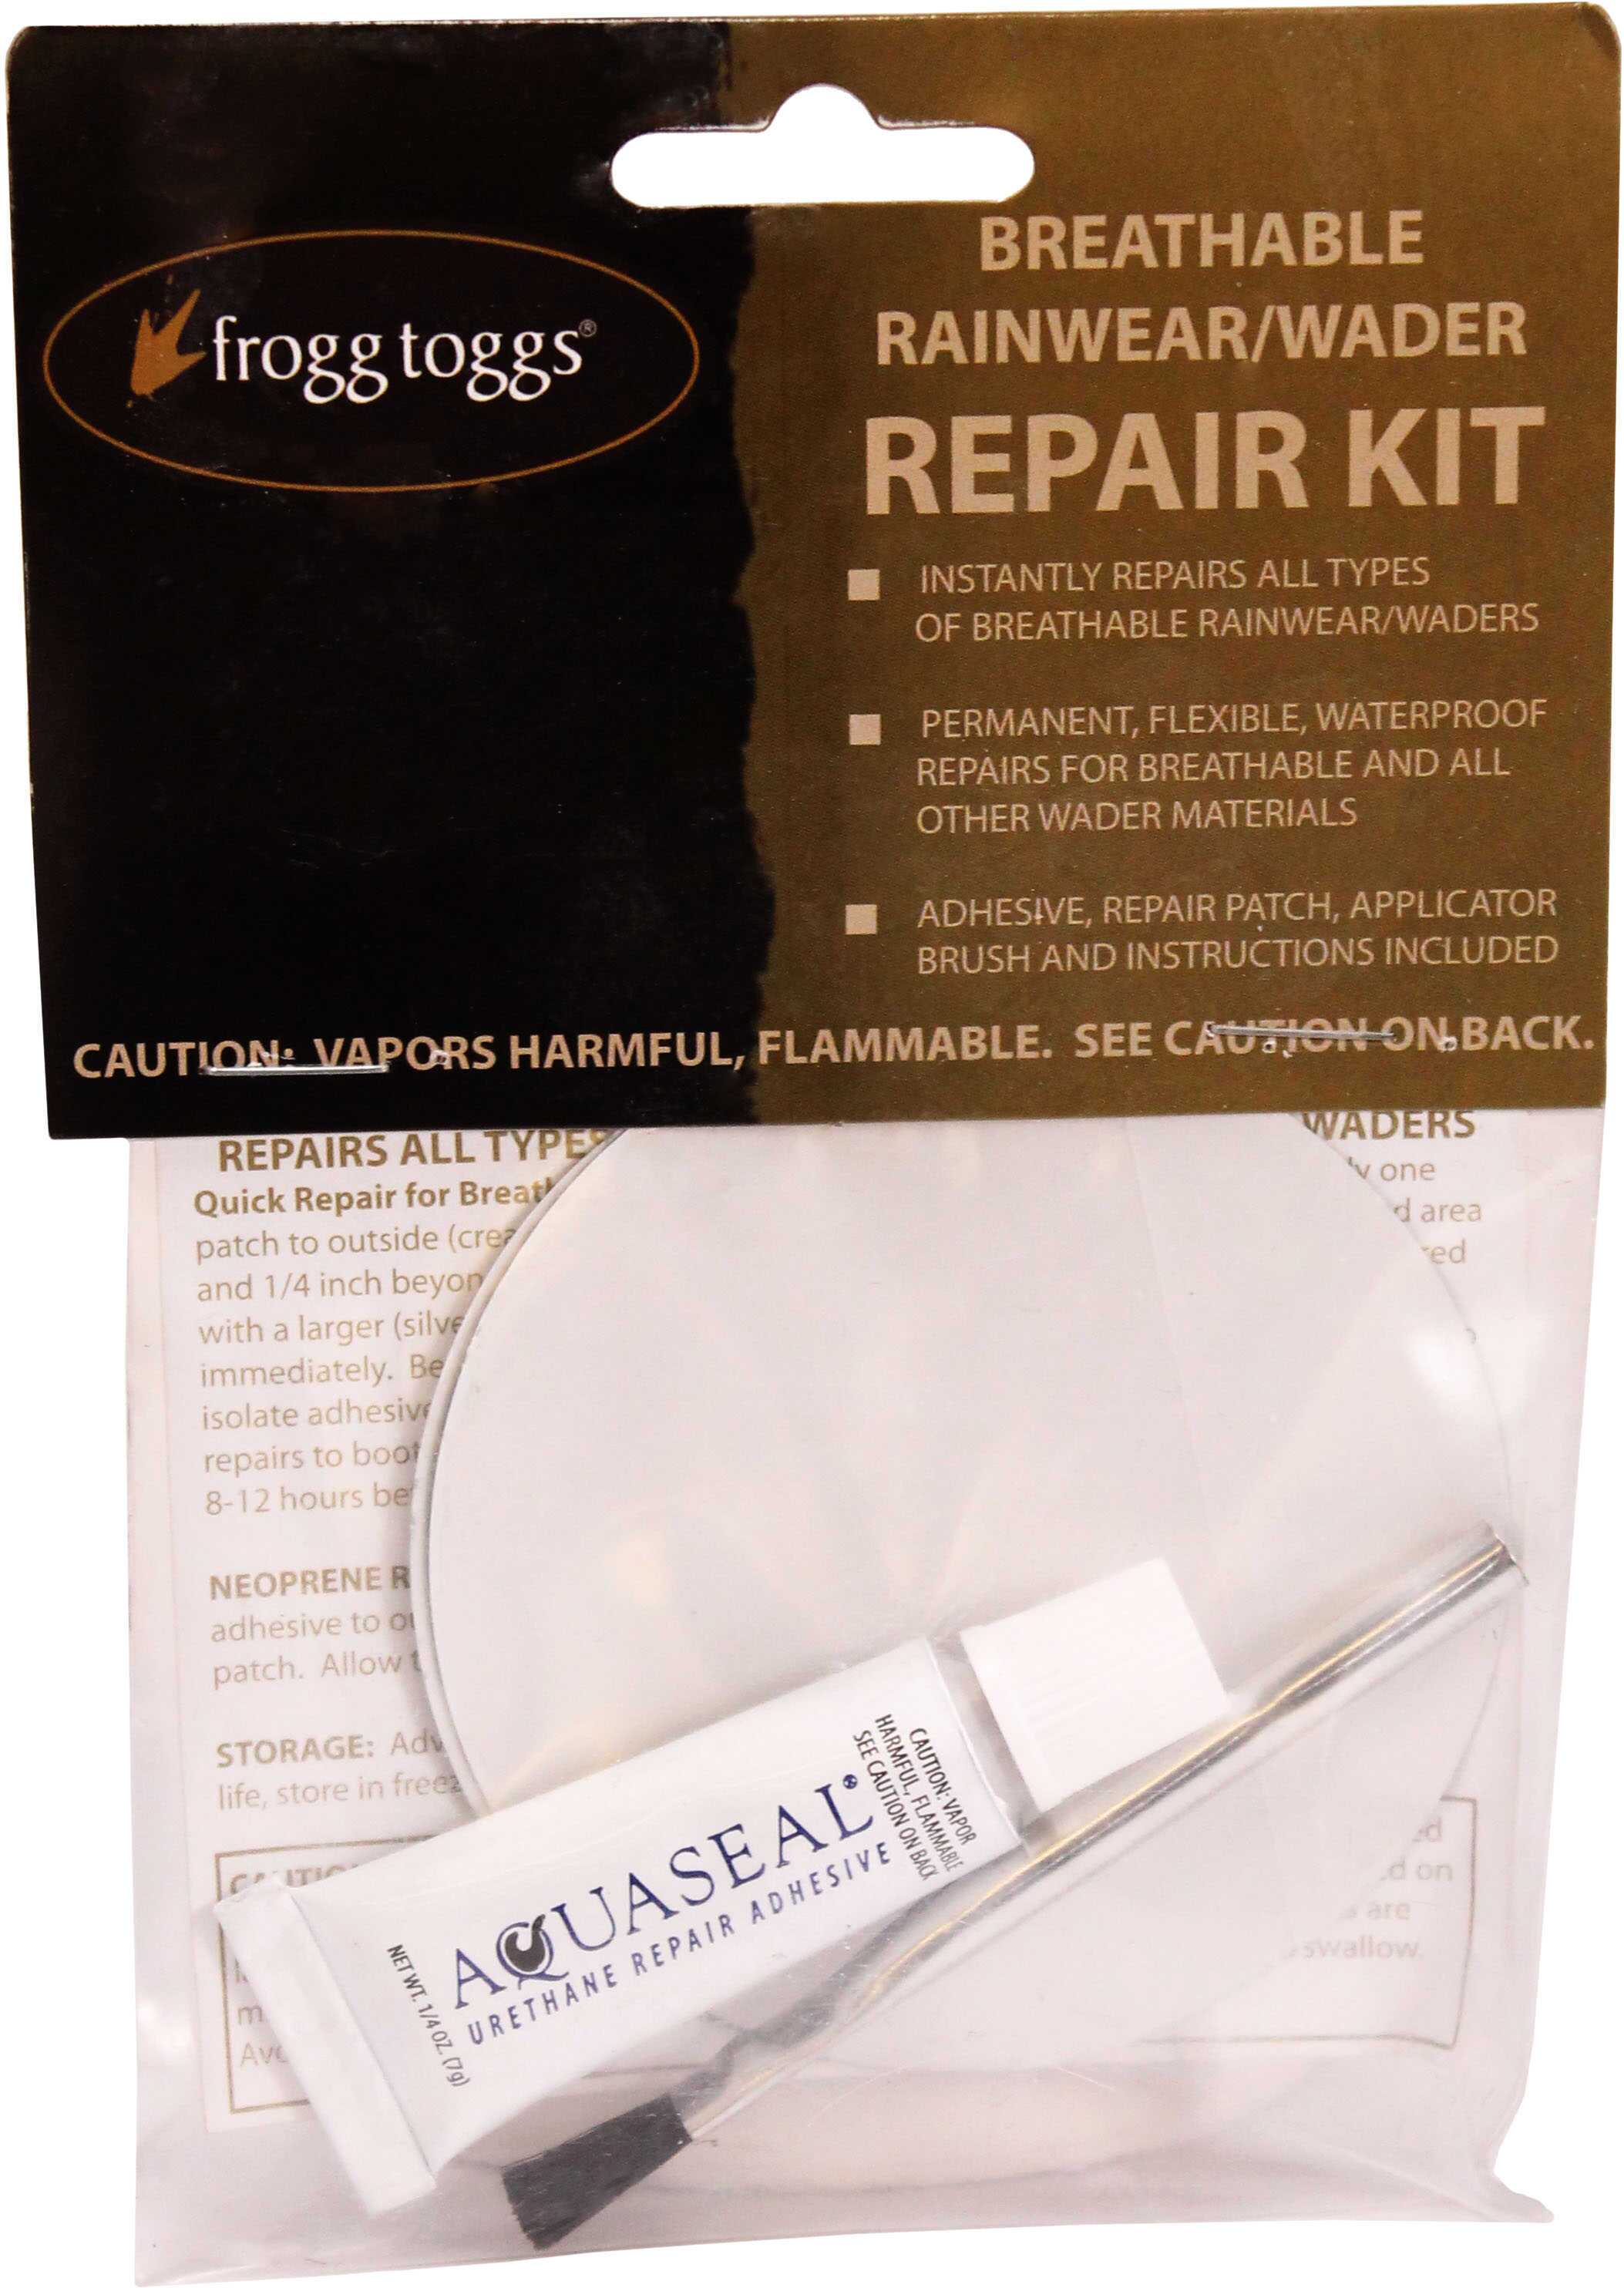 Frogg Toggs Breathable Rainwear & Wader Repair Kit 